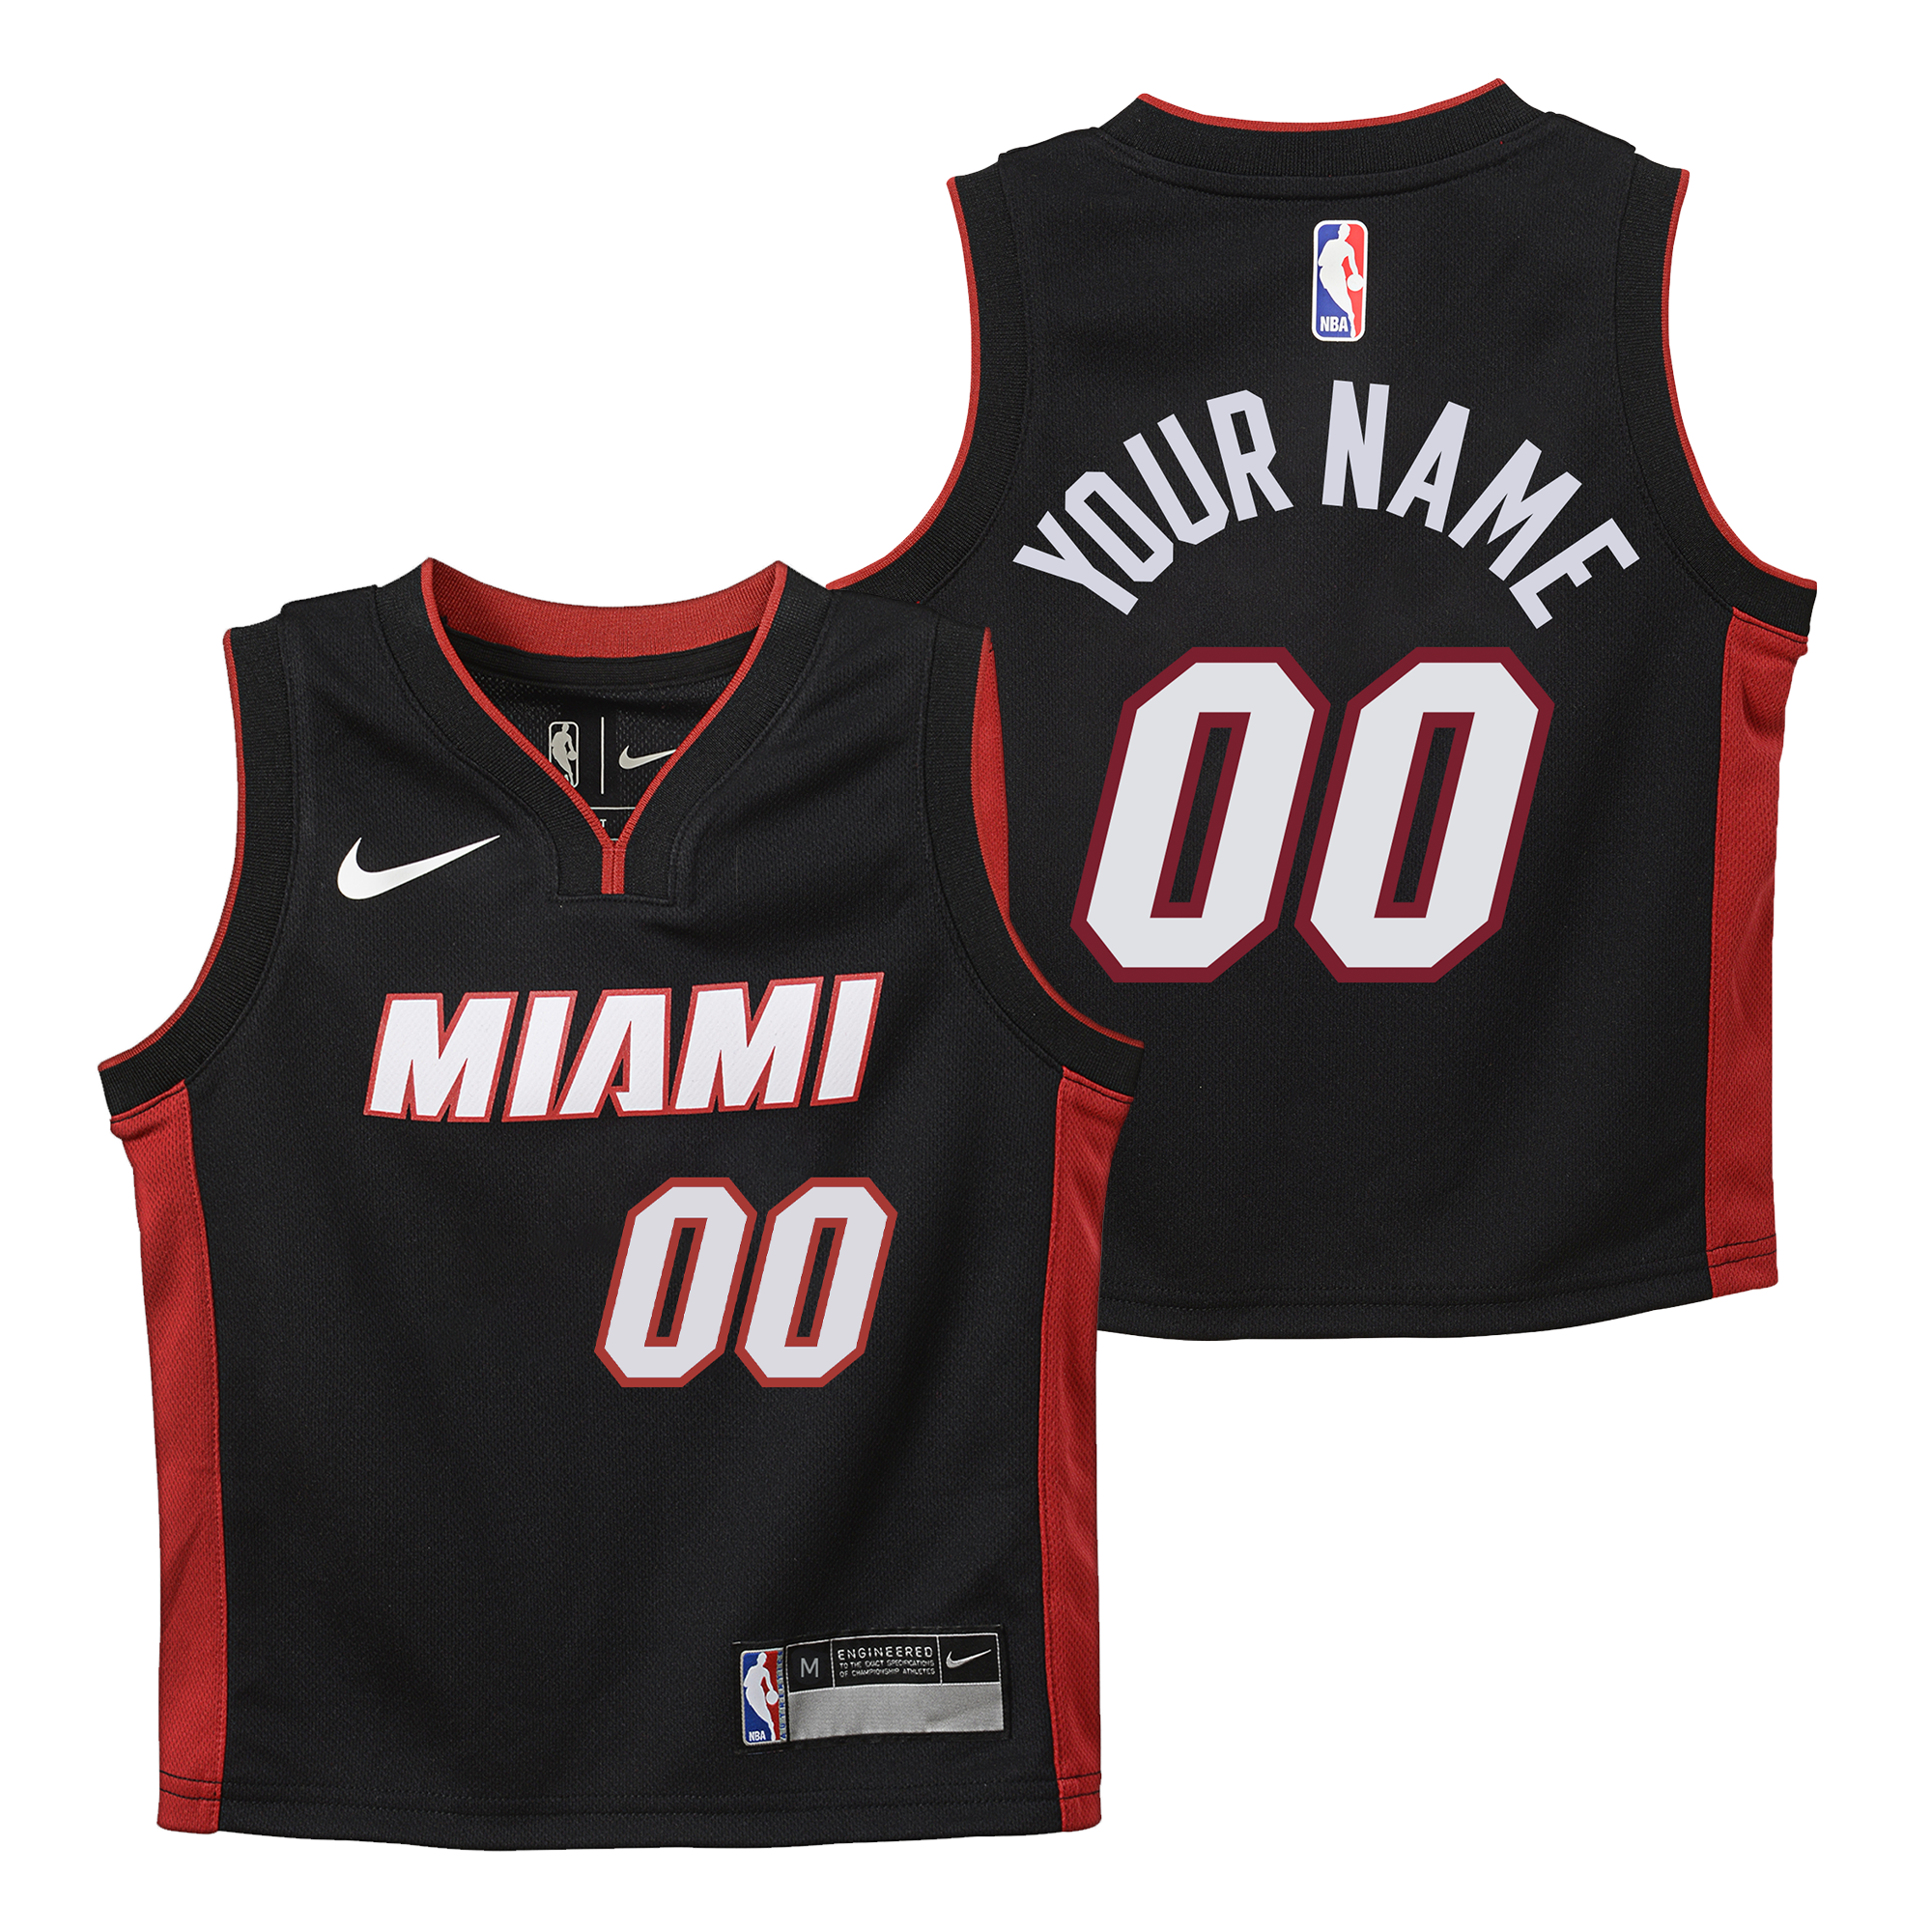 Miami Heat Vice Jersey - A Study In Successful Branding